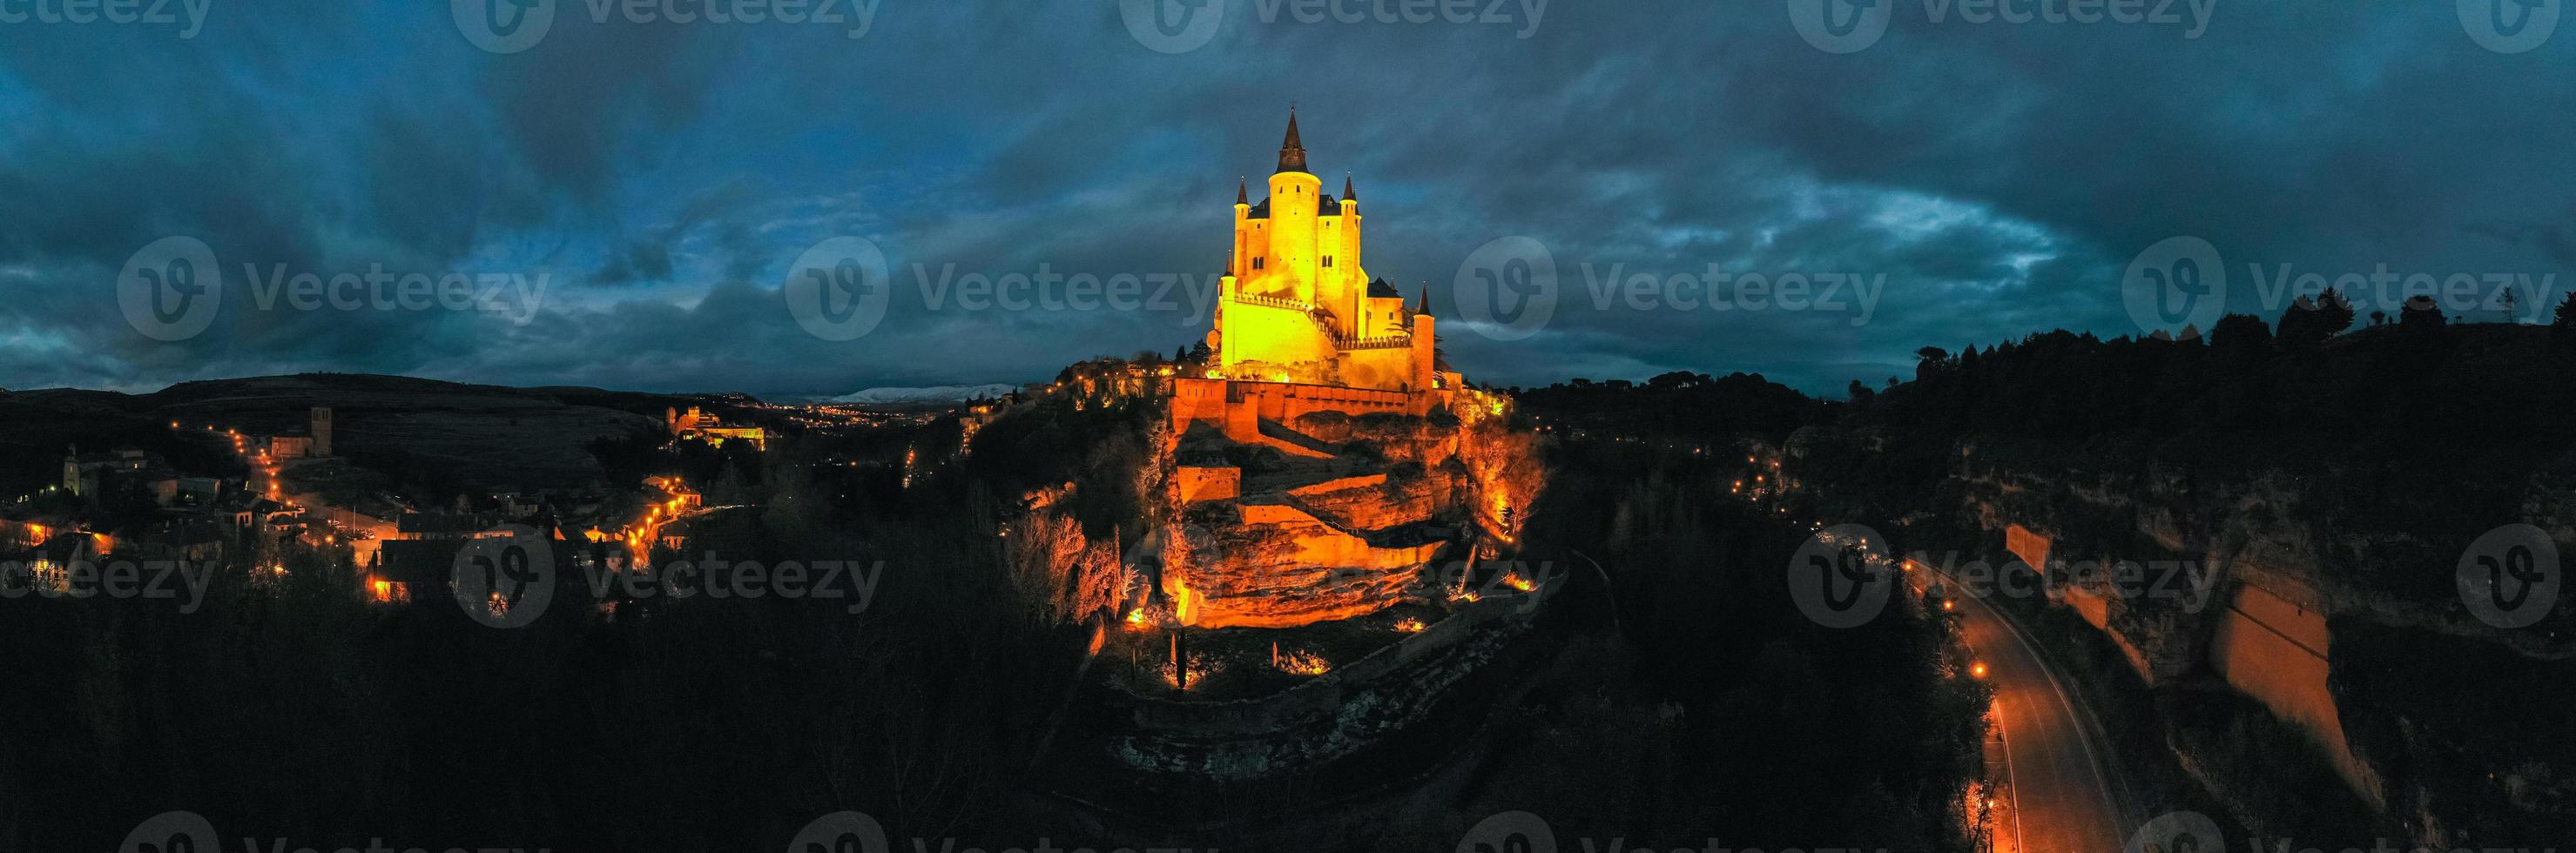 Alcazar Castle in Segovia, Spain. It is a medieval castle located in the city of Segovia, in Castile and Leon, Spain. photo